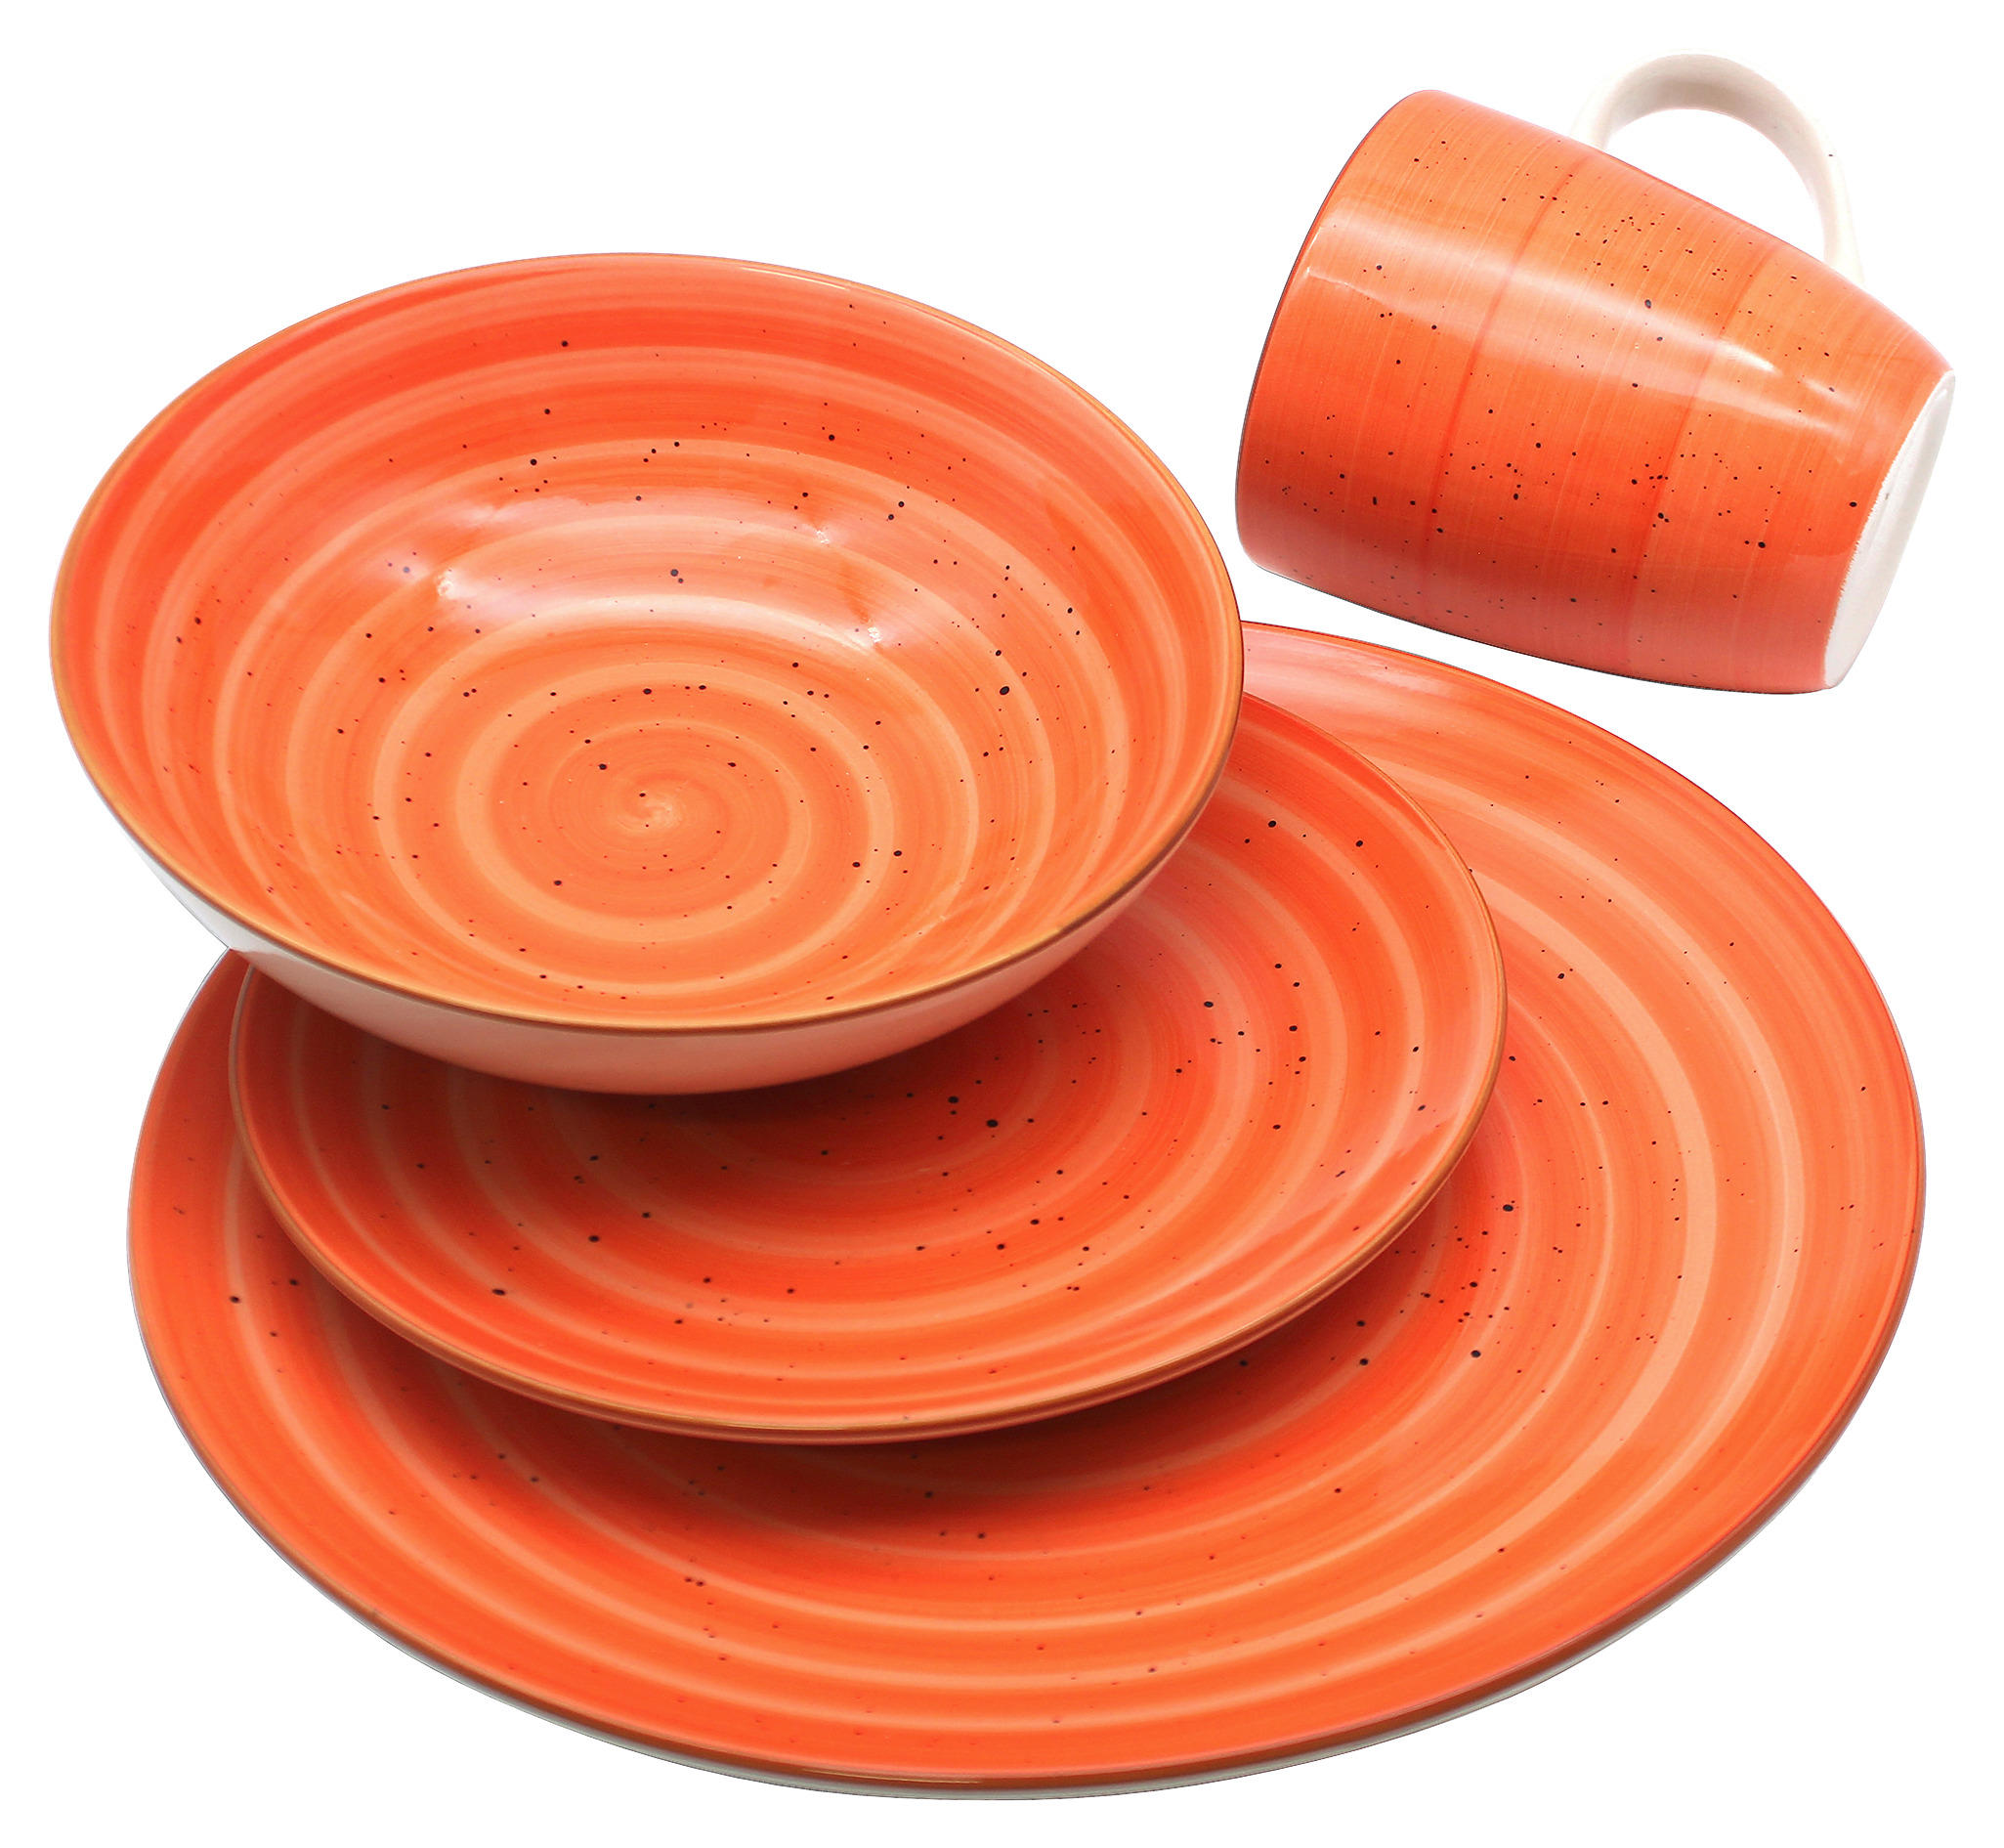 MICHELINO Kombiservice orange Keramik 16 tlg. Kombiservice_16tlg. - orange